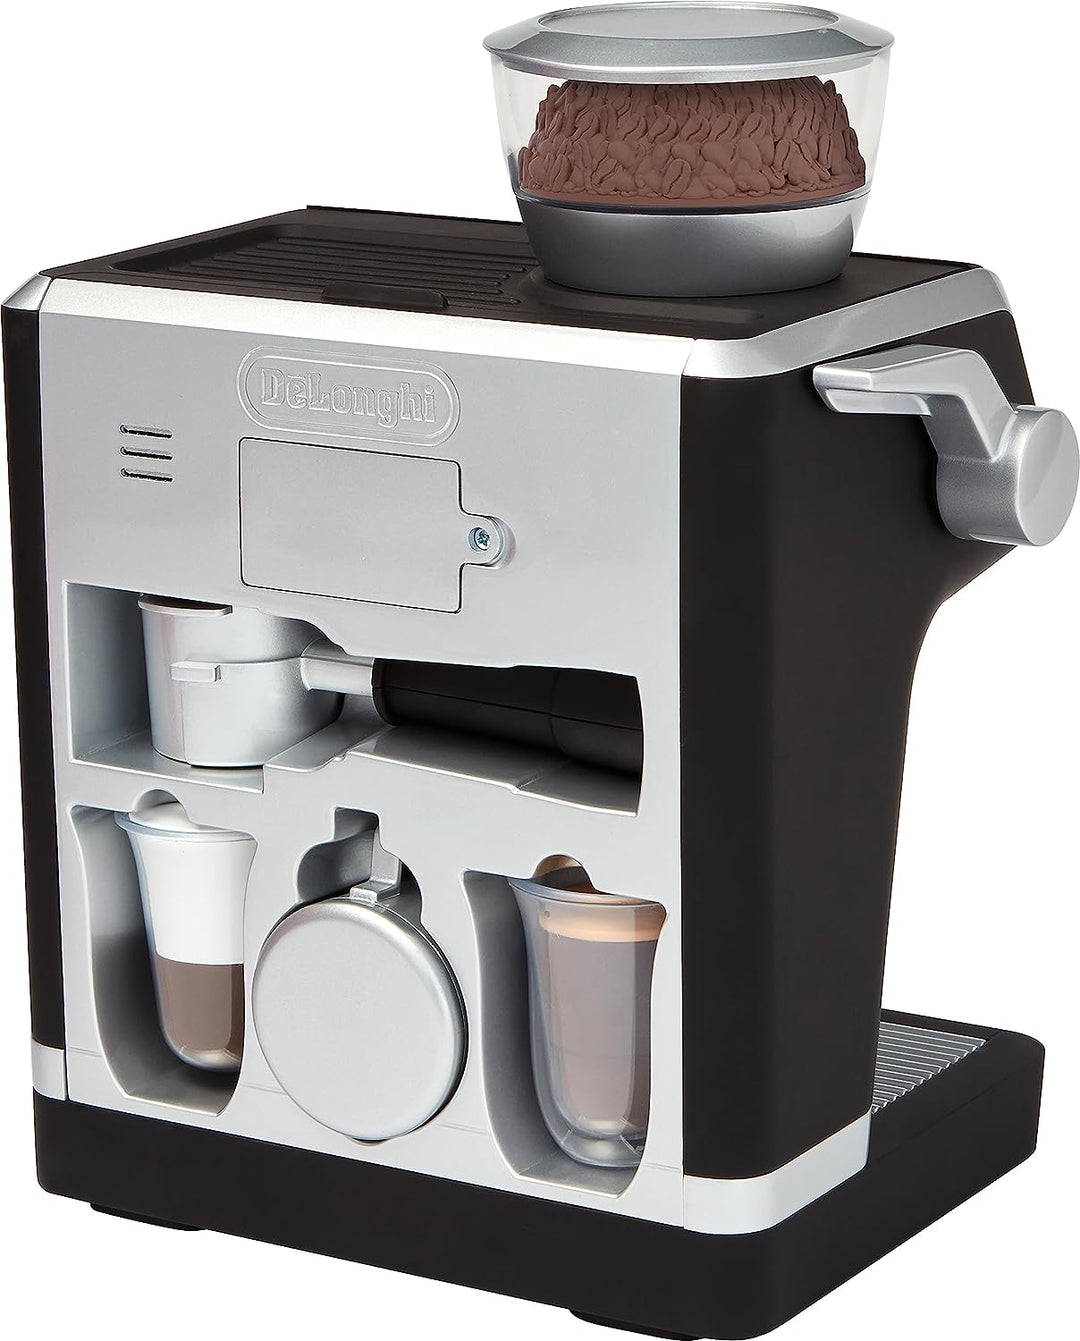 Casdon DeLonghi Barista Coffee Machine